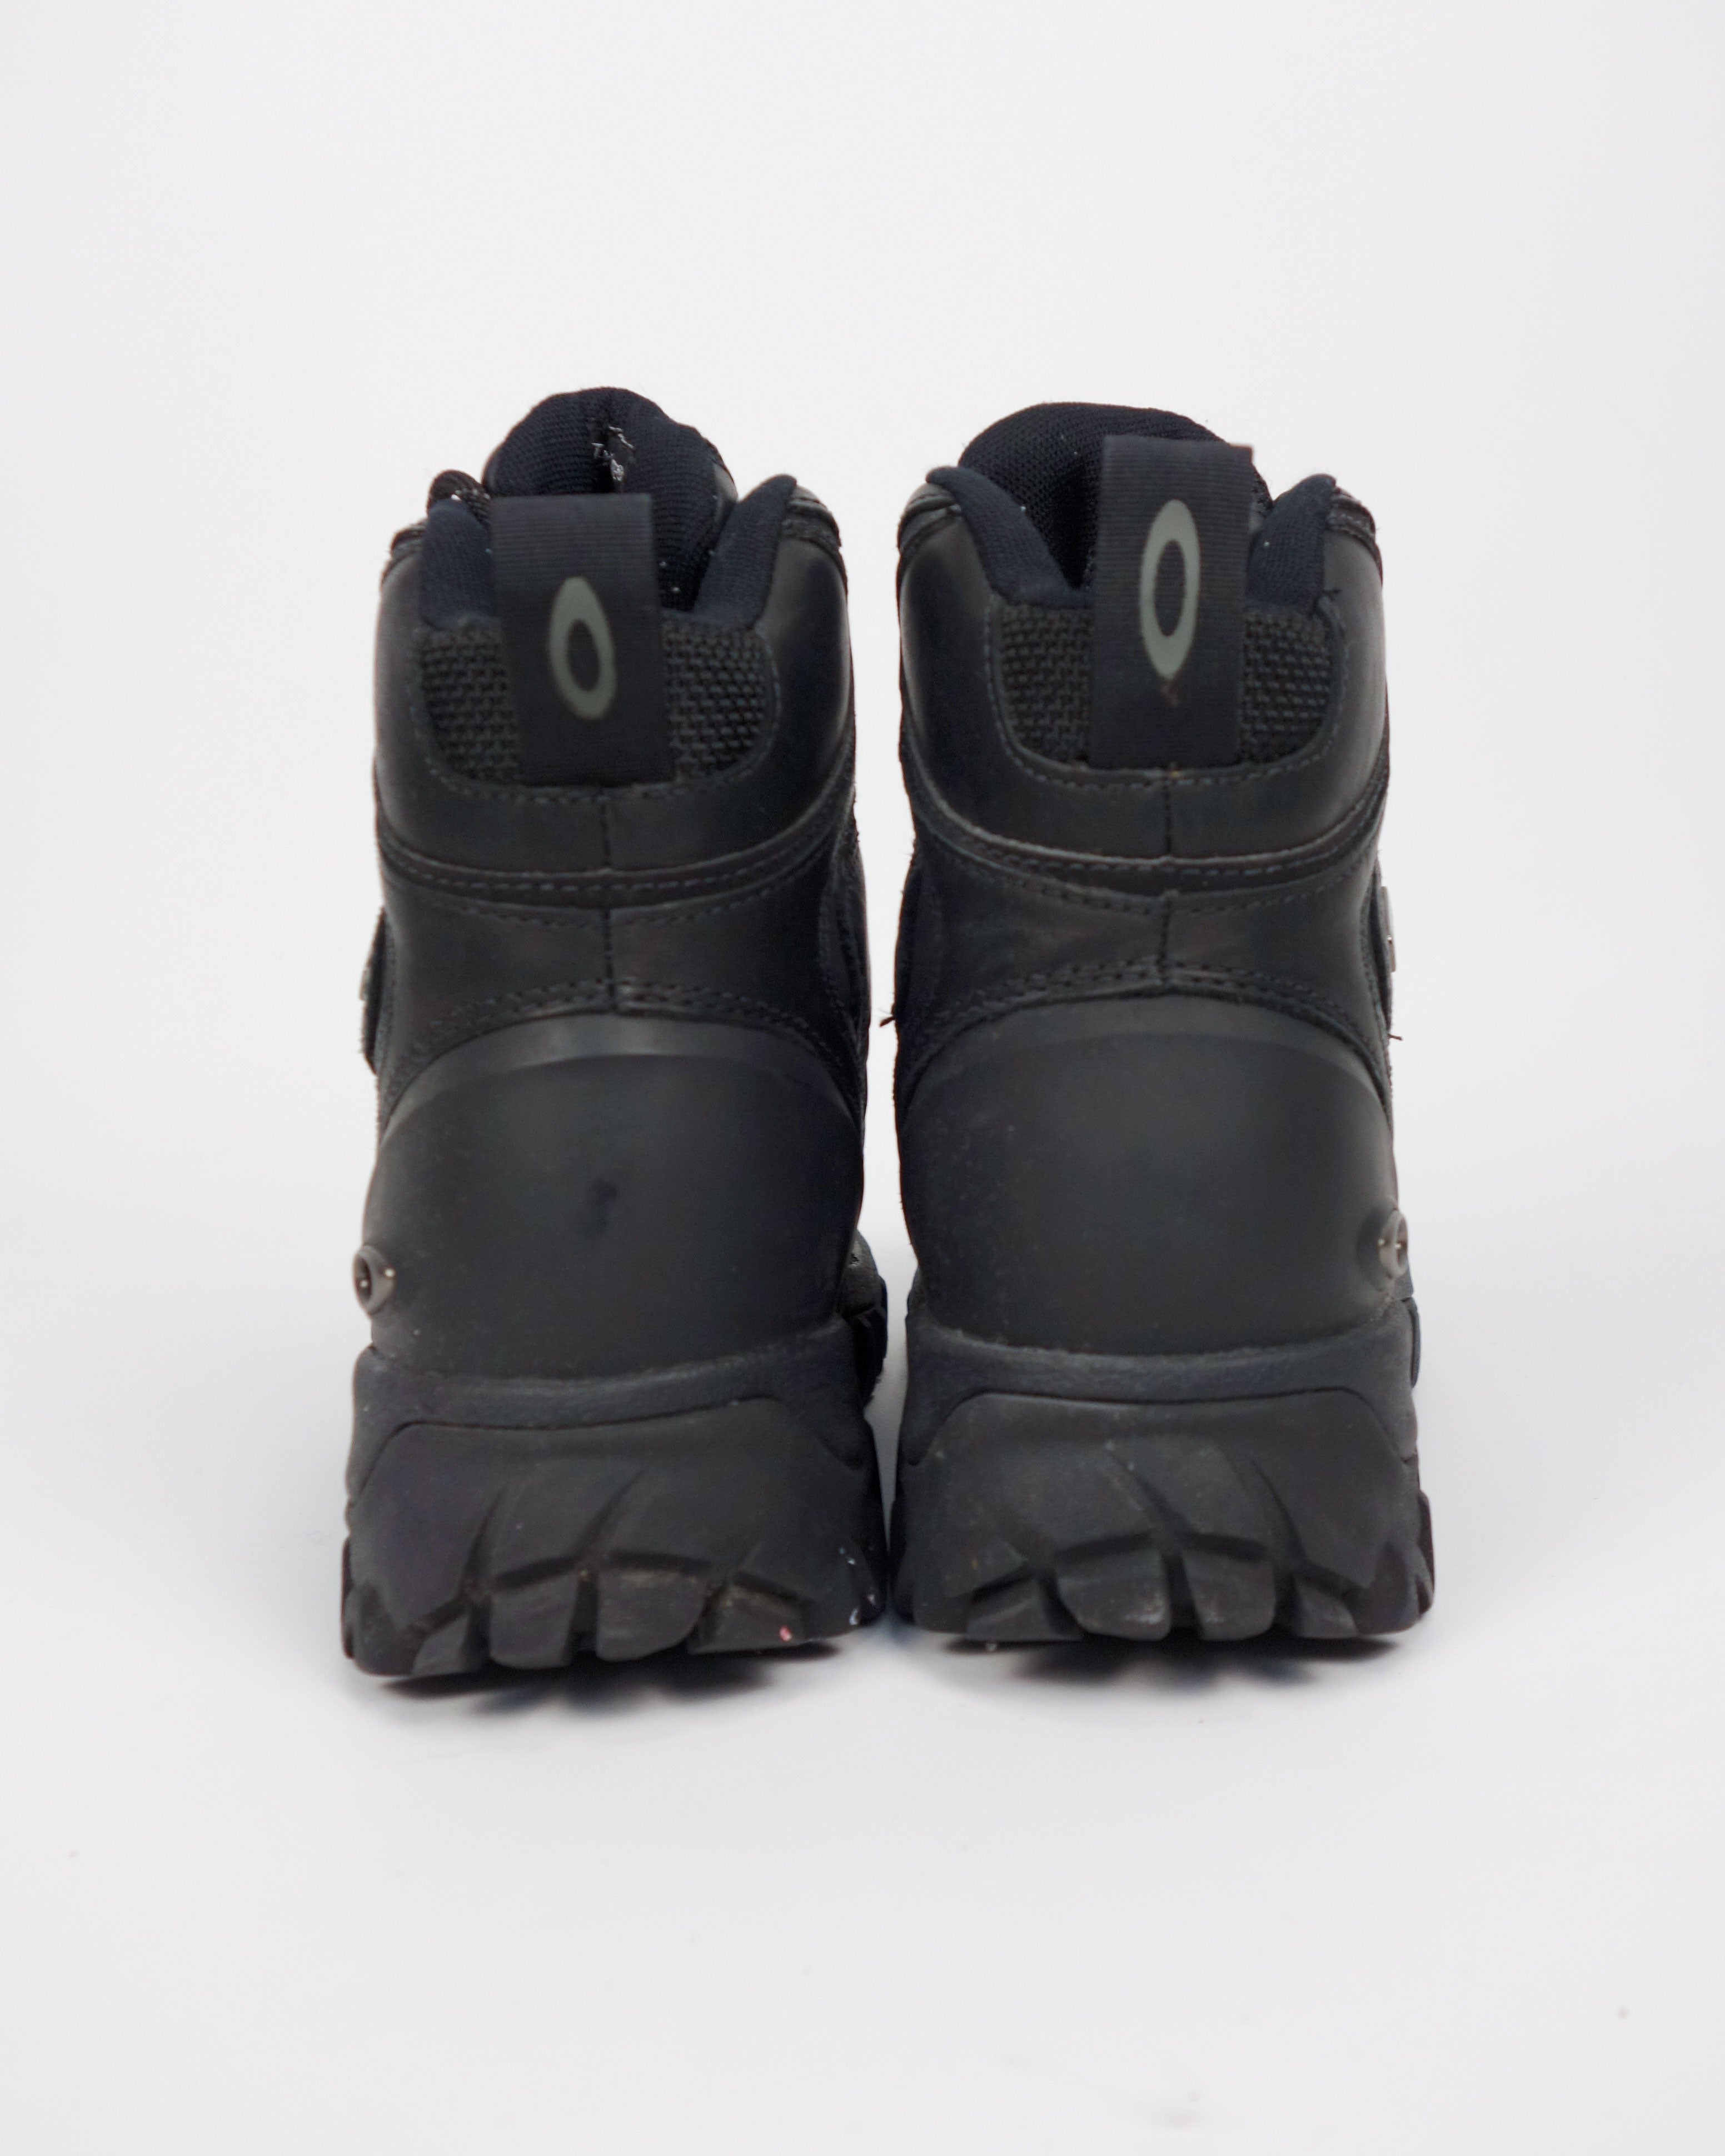 Oakley Assault Leather Black Boots 1990's – Vintage TTS